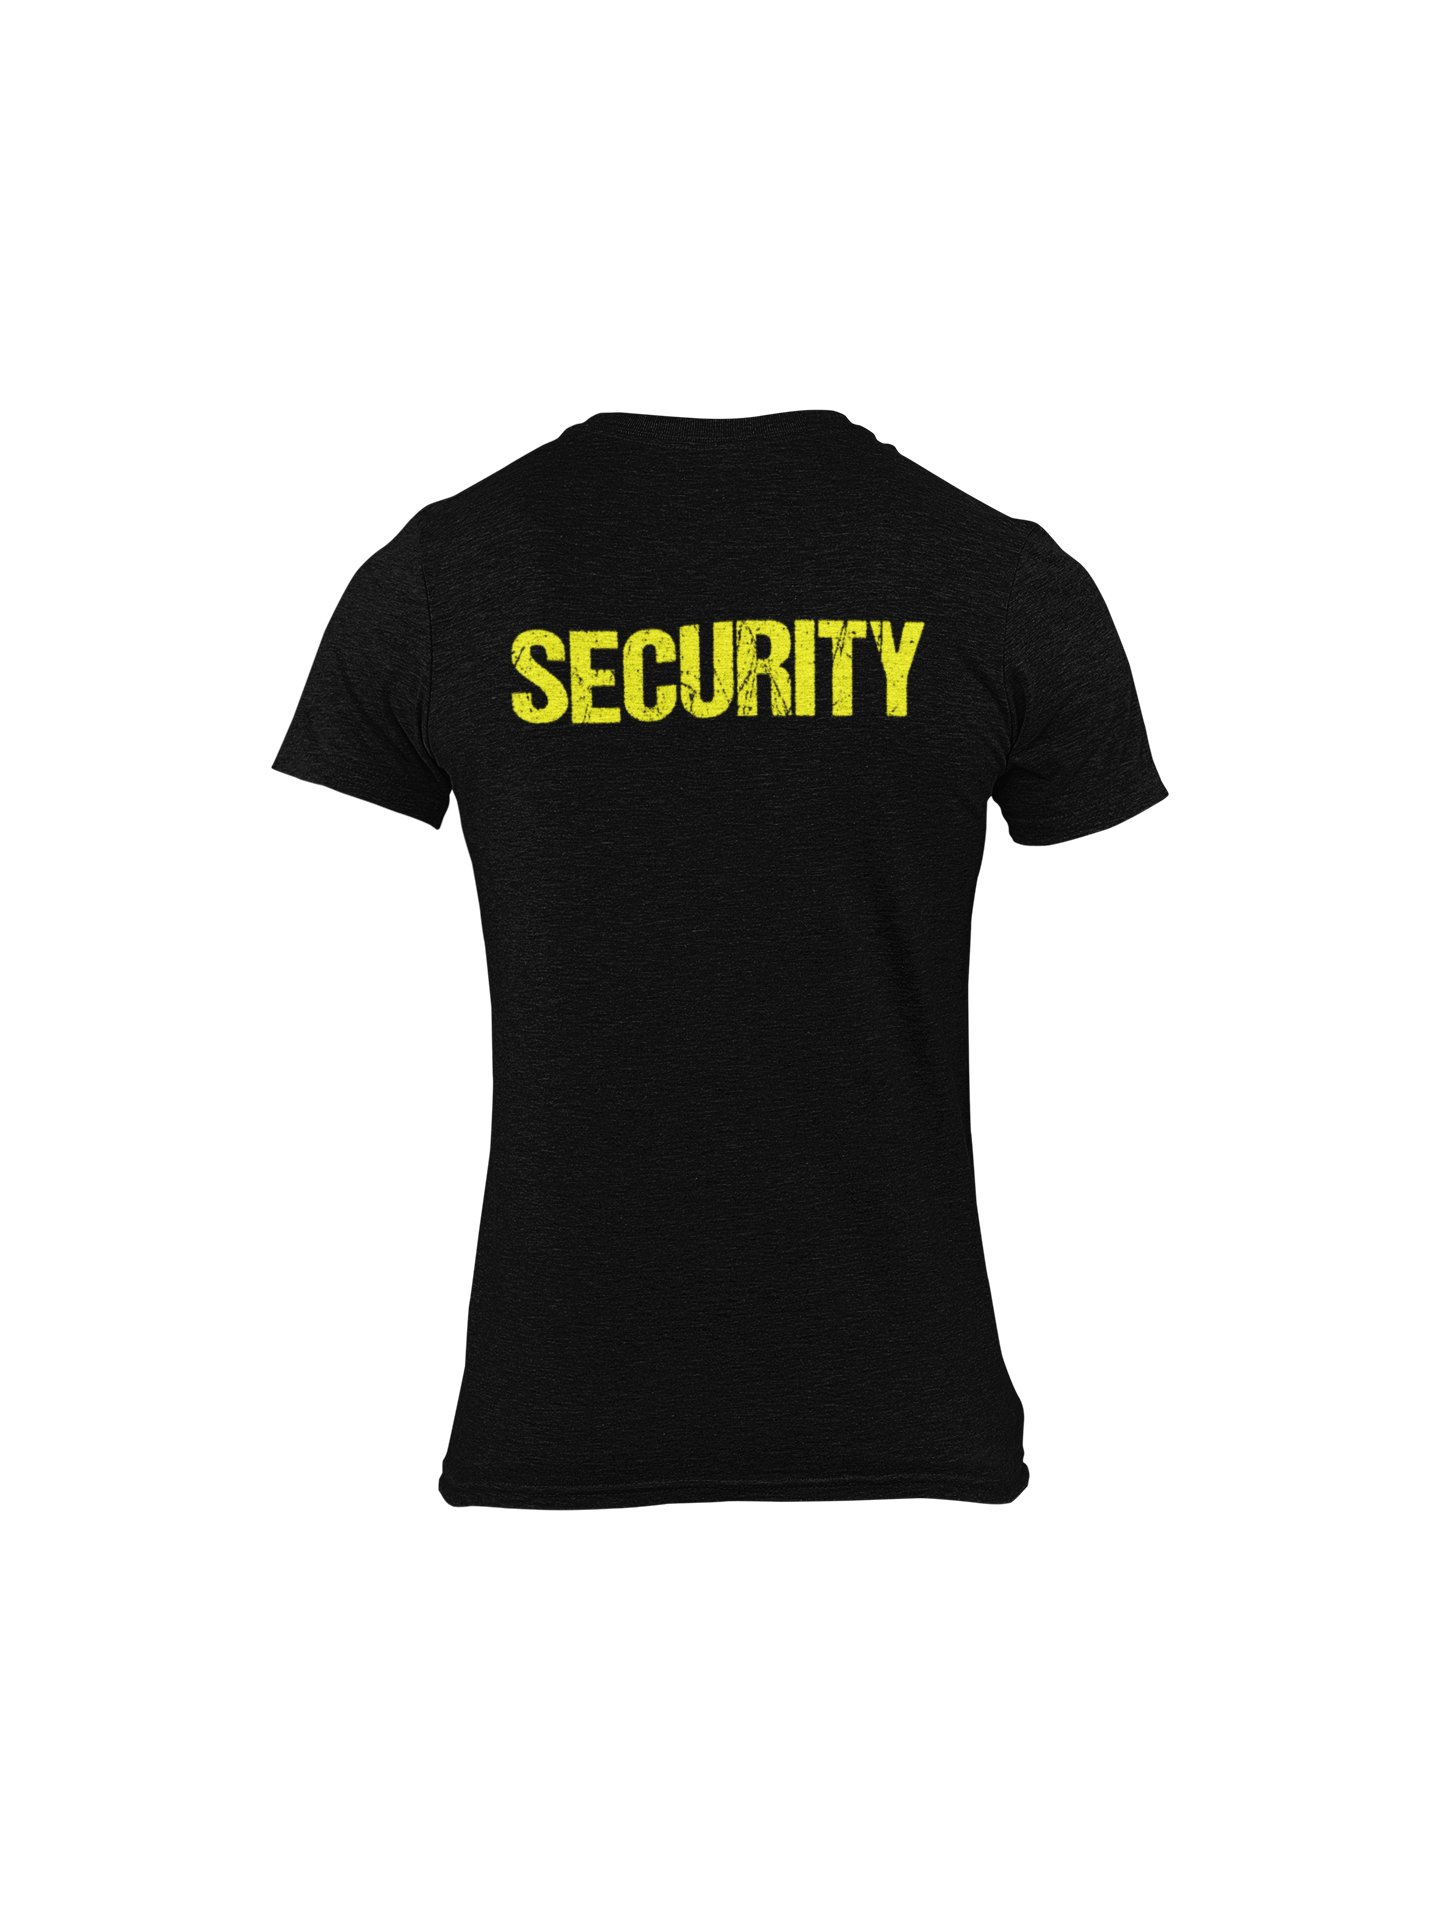 Men's Distressed Security Tee Front & Back Print (Black & Neon)